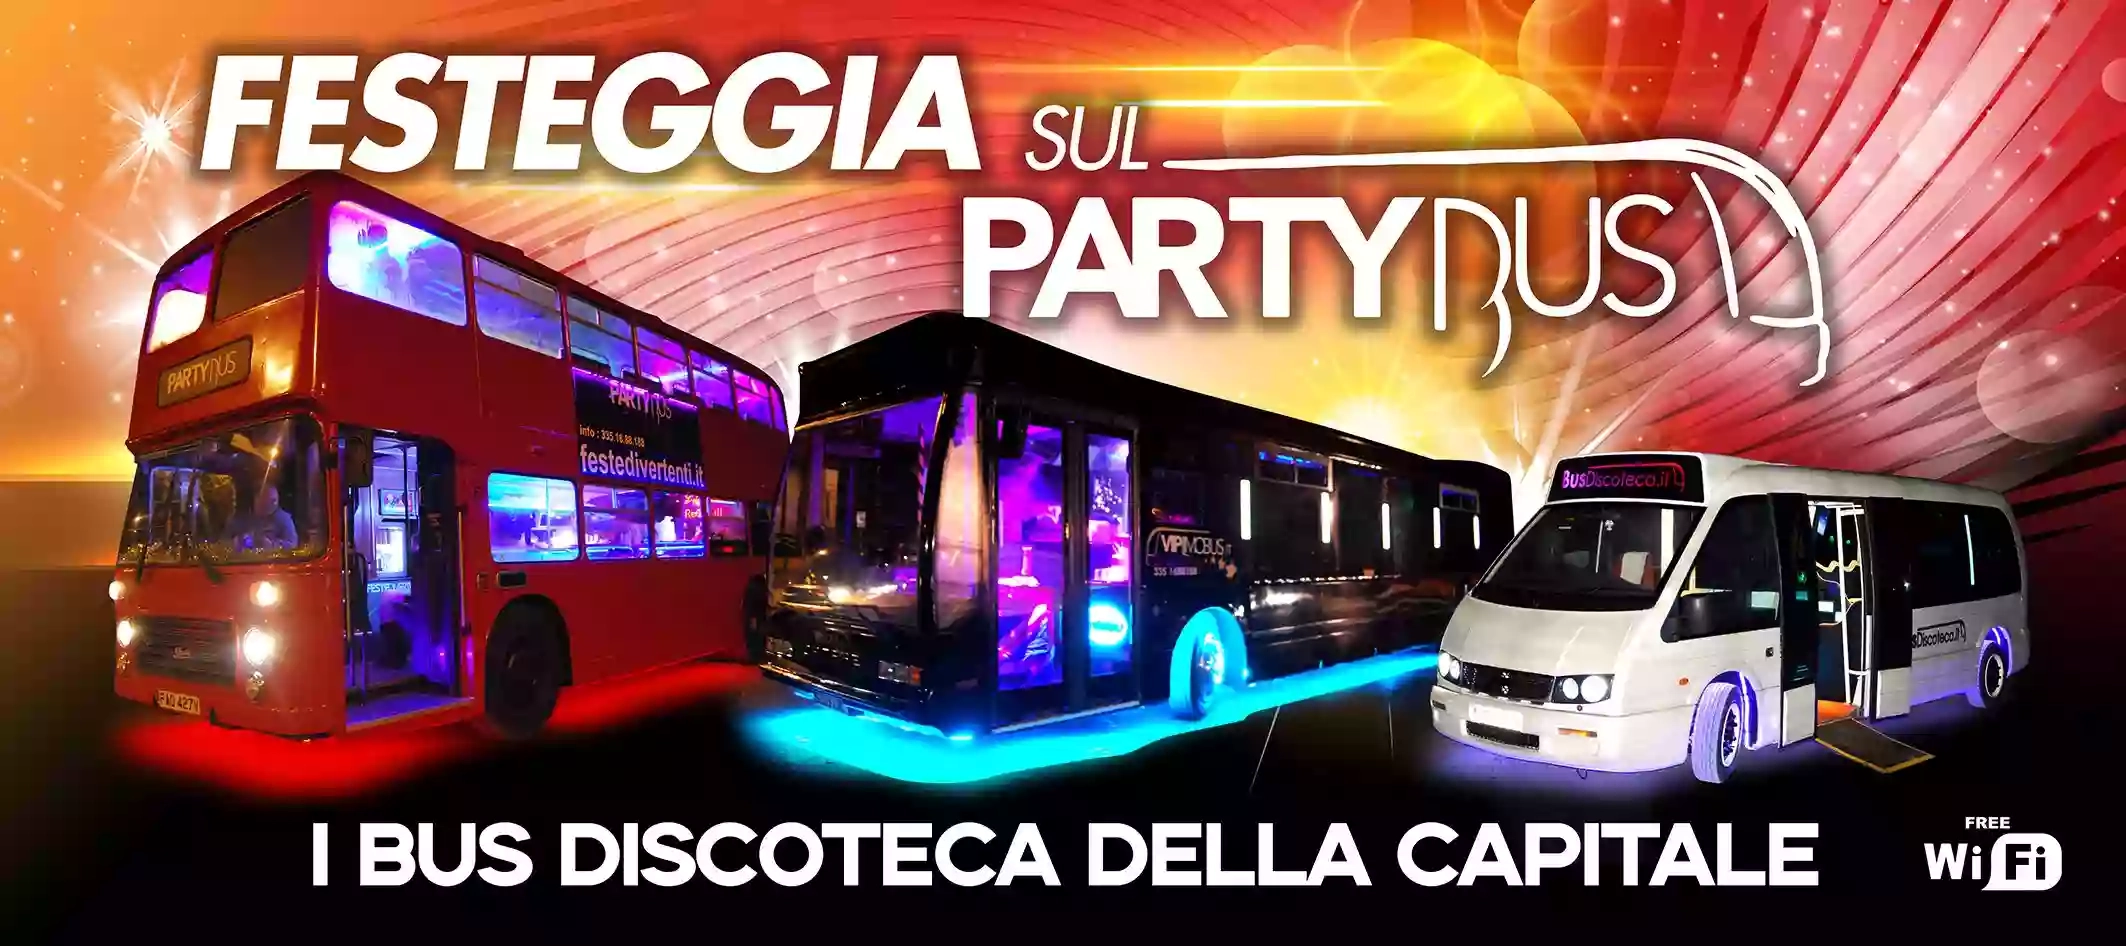 Party Bus - FesteDivertenti